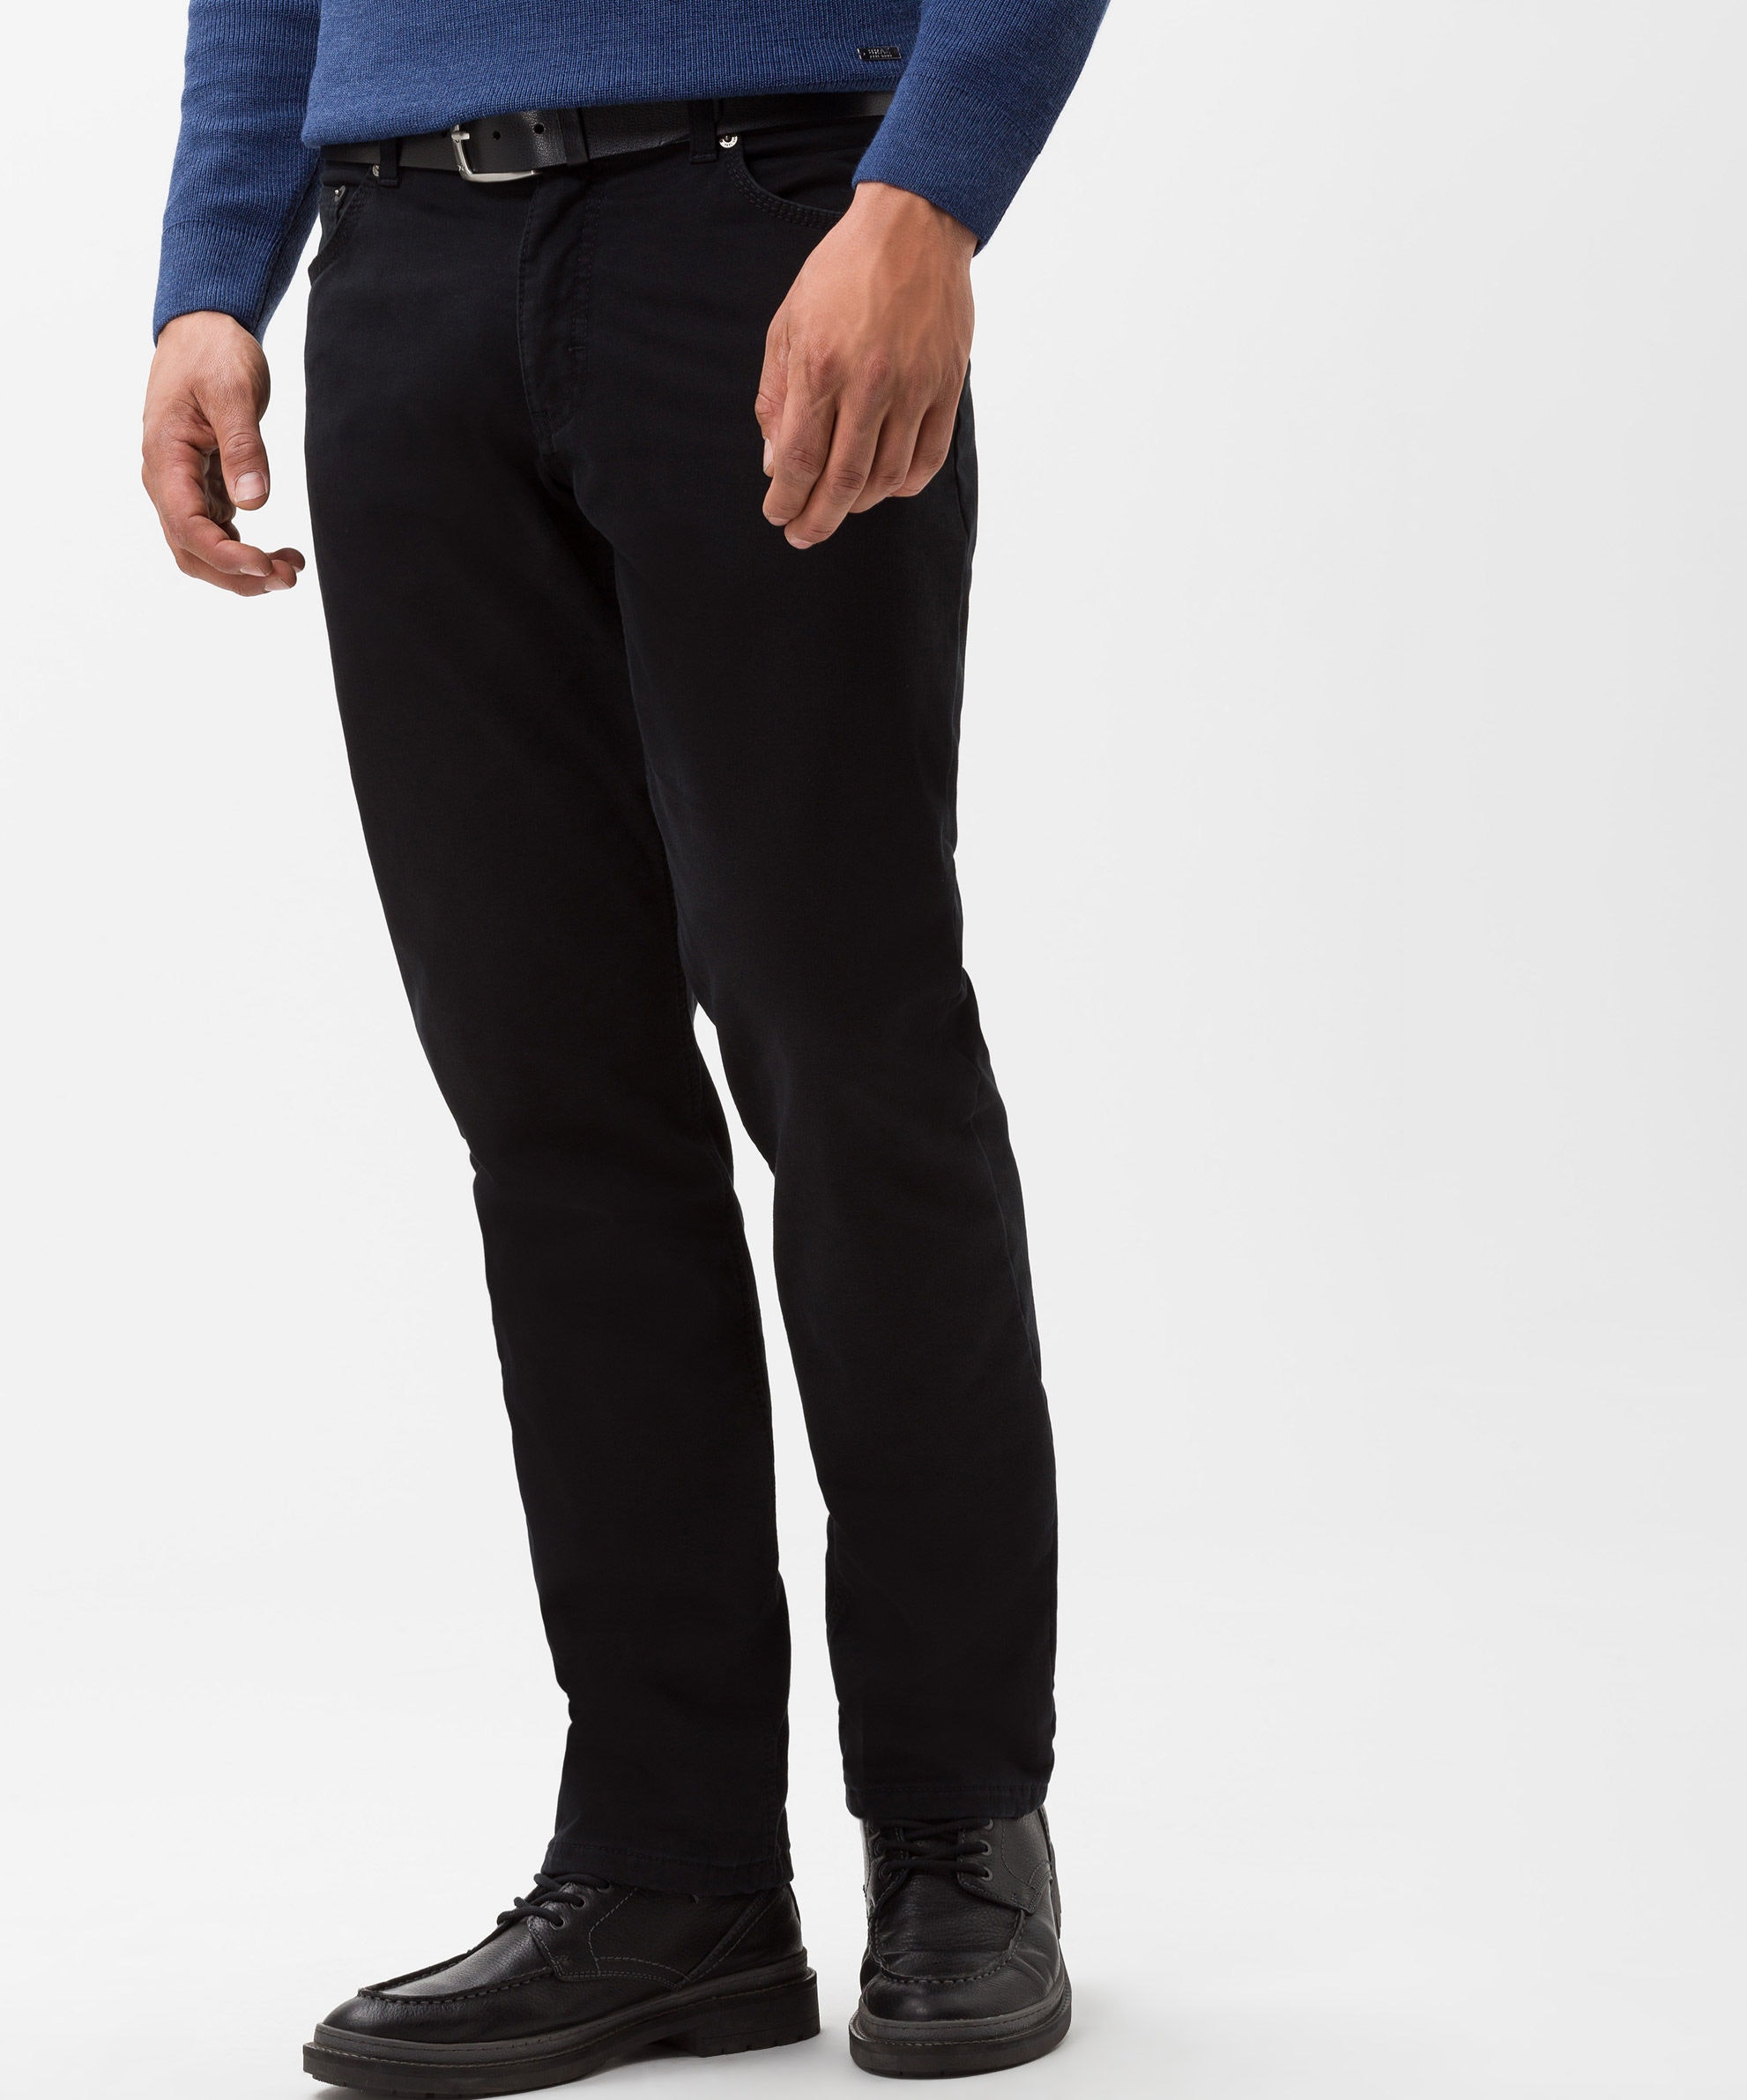 Brax Cooper Thermo Concept Pants Black | Jan Rozing Men's Fashion